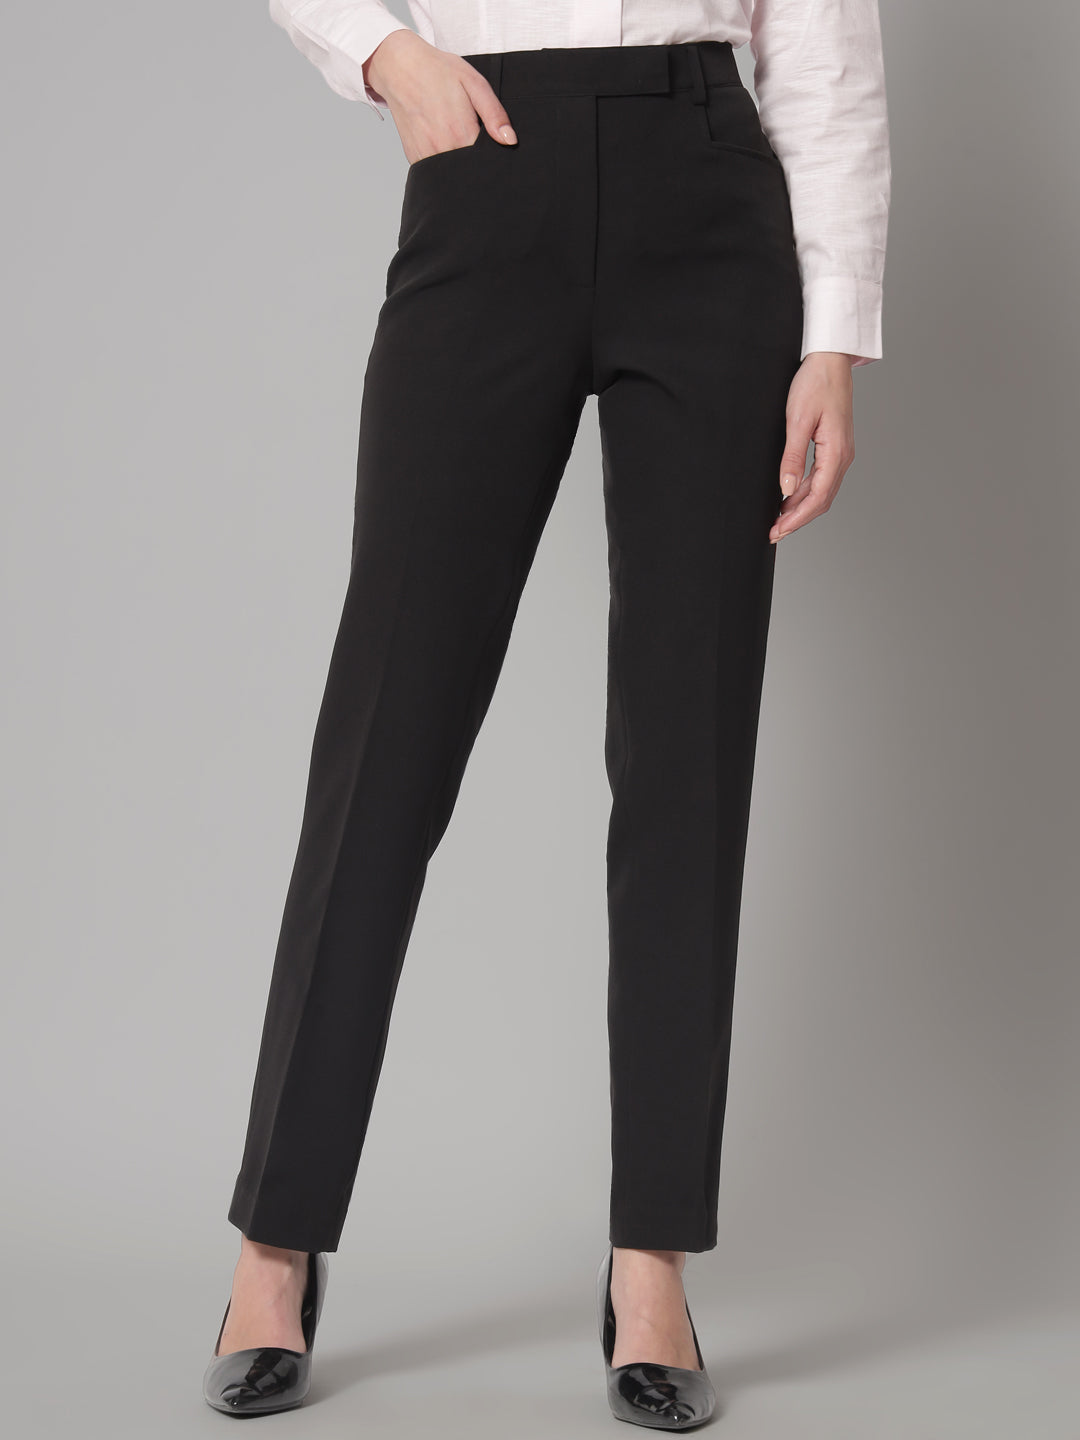 Korean Mens Business Leisure Formal Dress Trousers Cropped Pants Fashion  Slim L | eBay